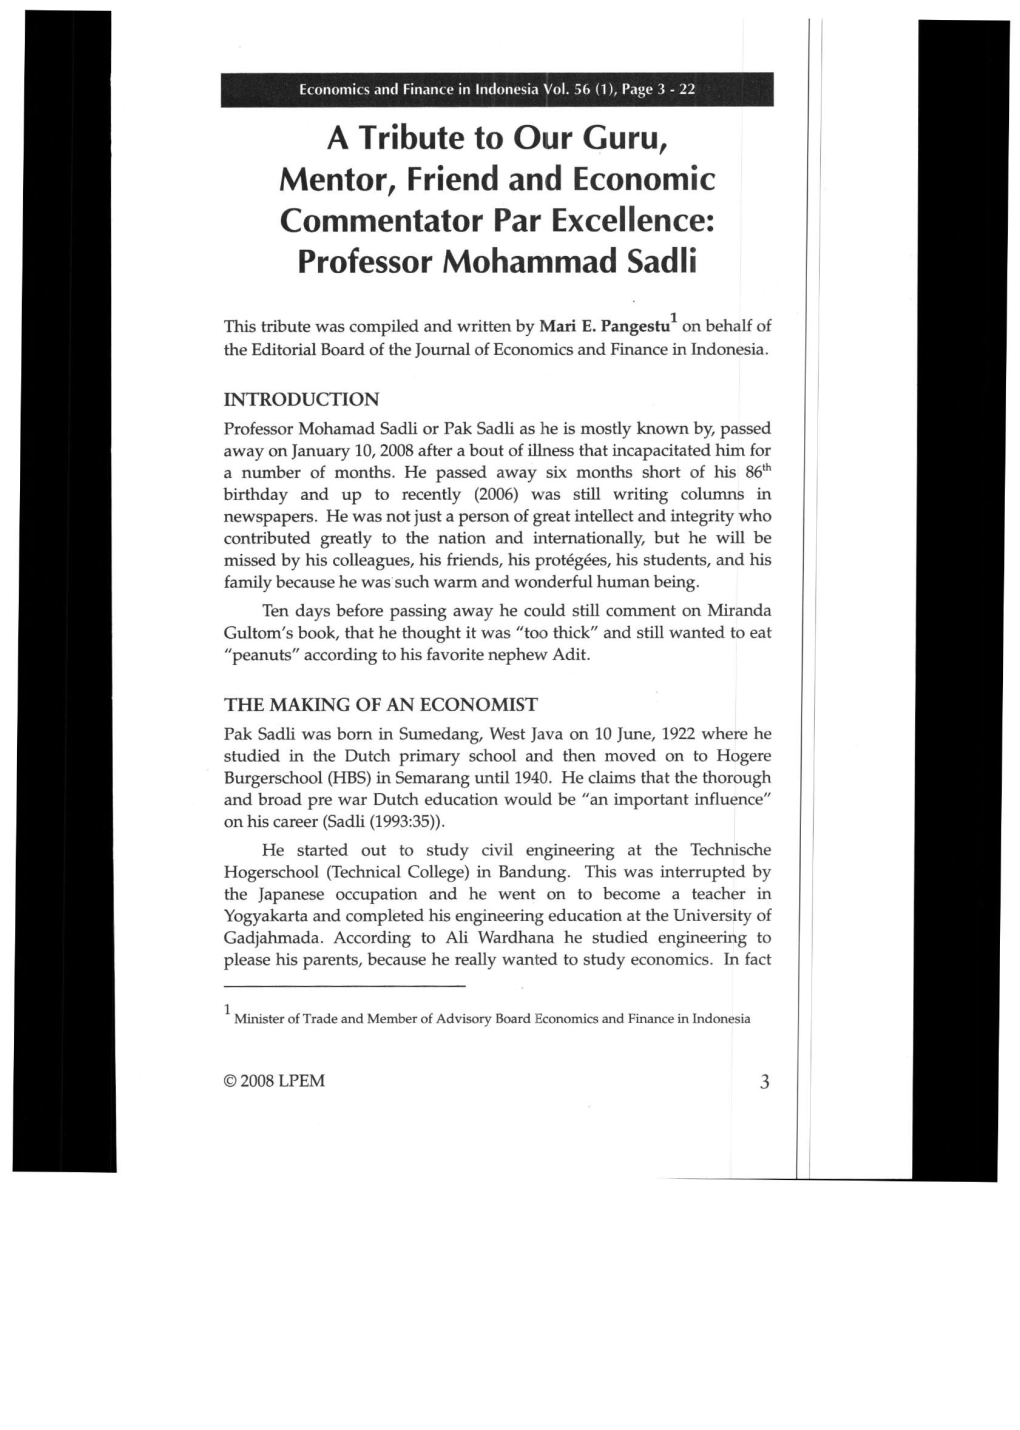 Professor Mohammad Sadli